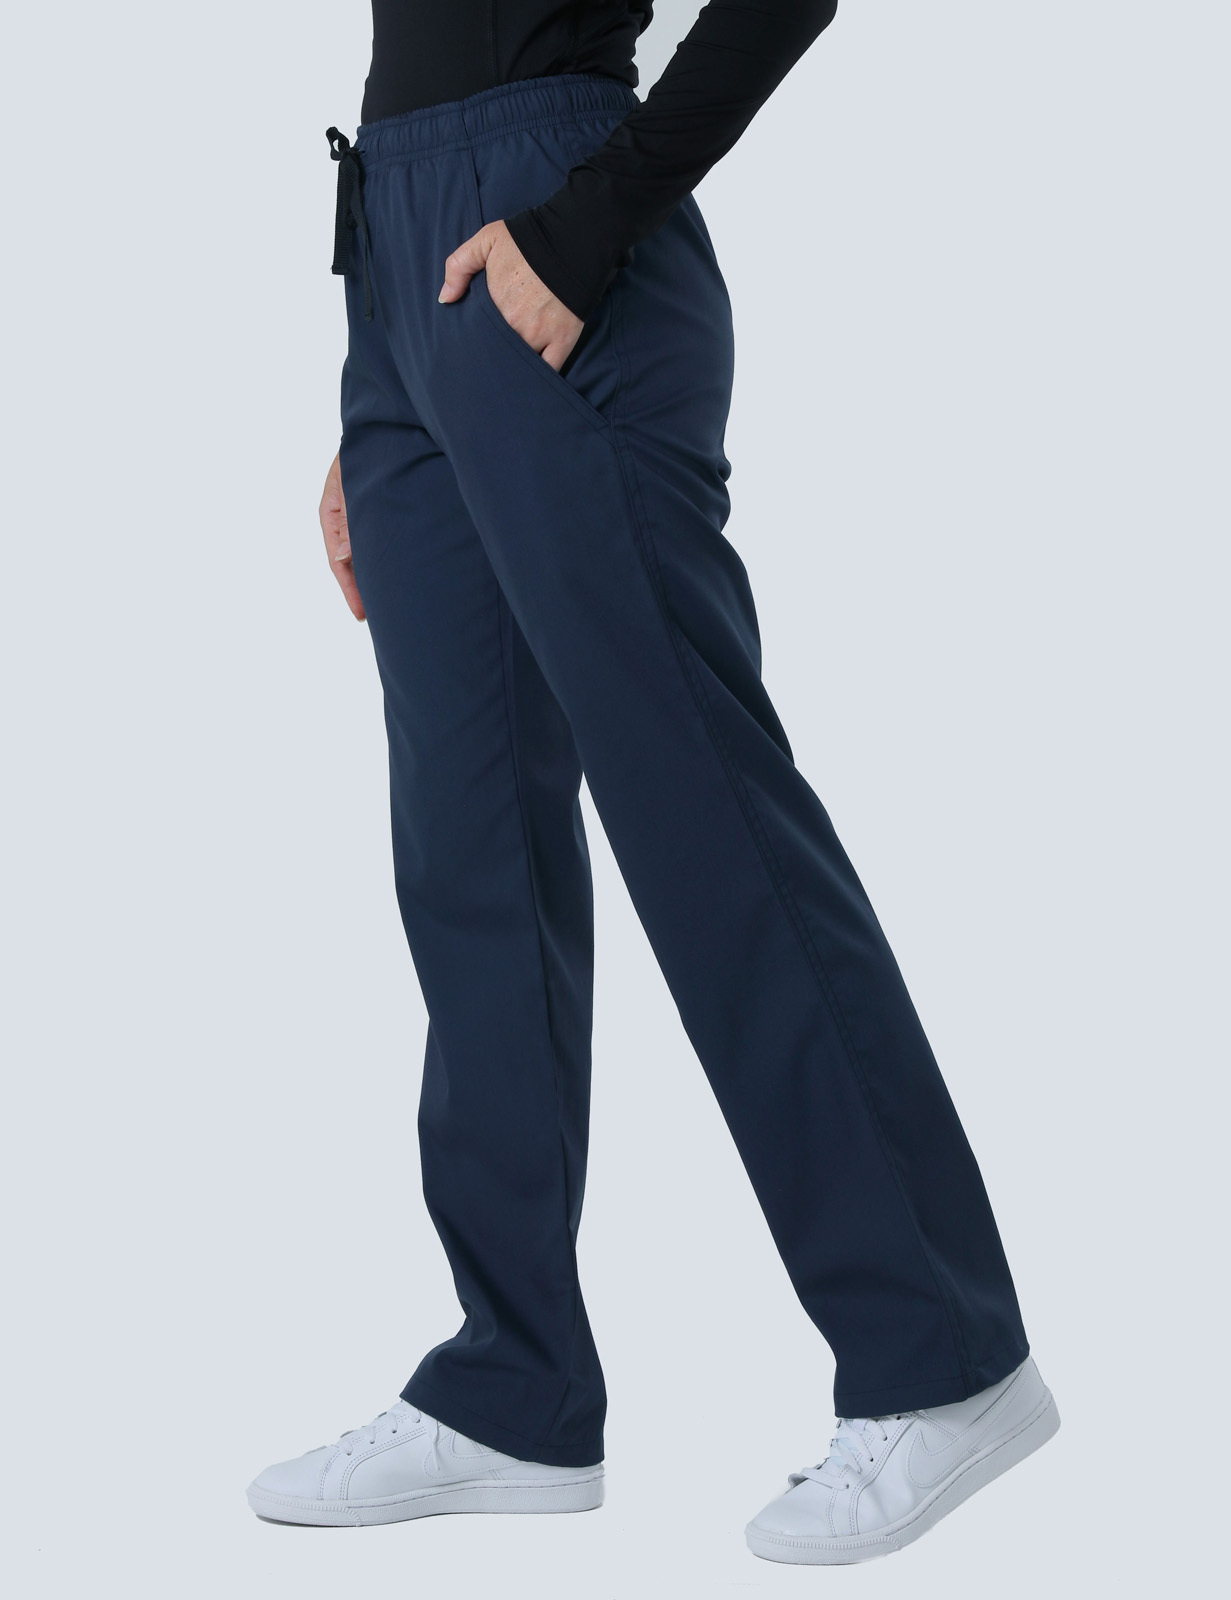 Ipswich Hospital Clinical Measurements Uniform Set Bundle (Women's Fit Spandex and Regular Pants in Navy + 3 Logos)